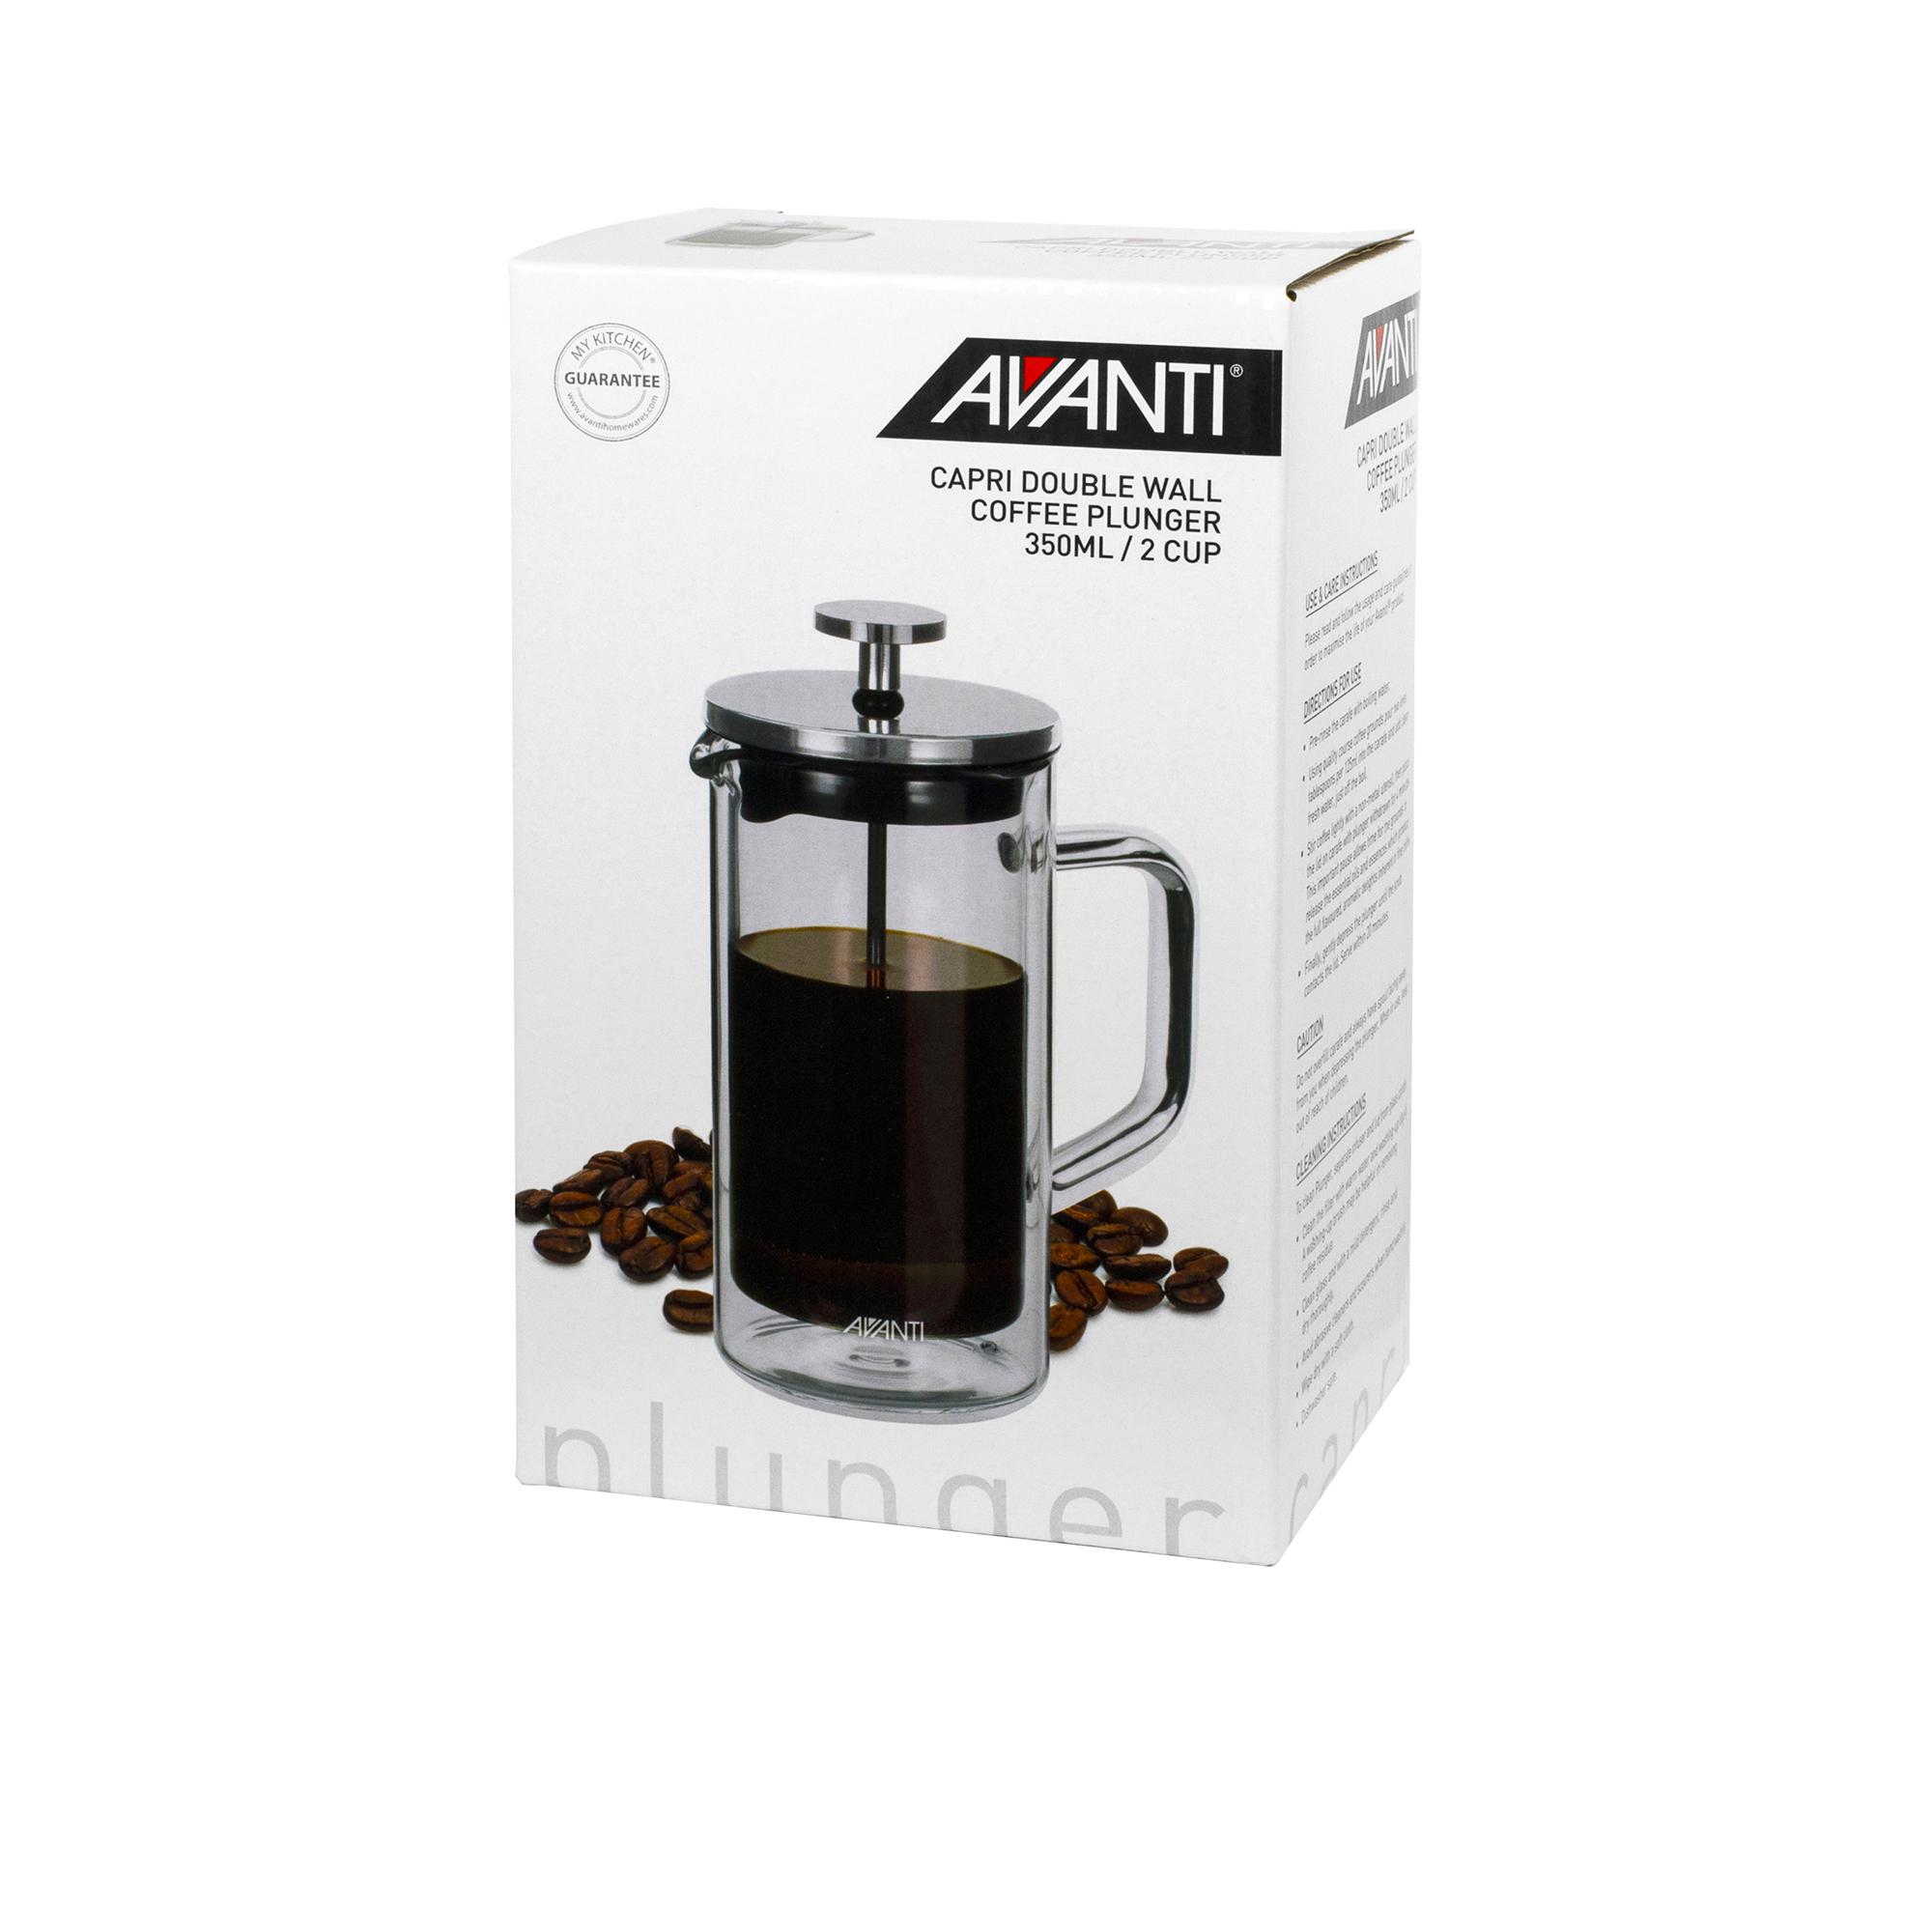 Avanti Capri Double Wall Coffee Plunger 2 Cup Image 4